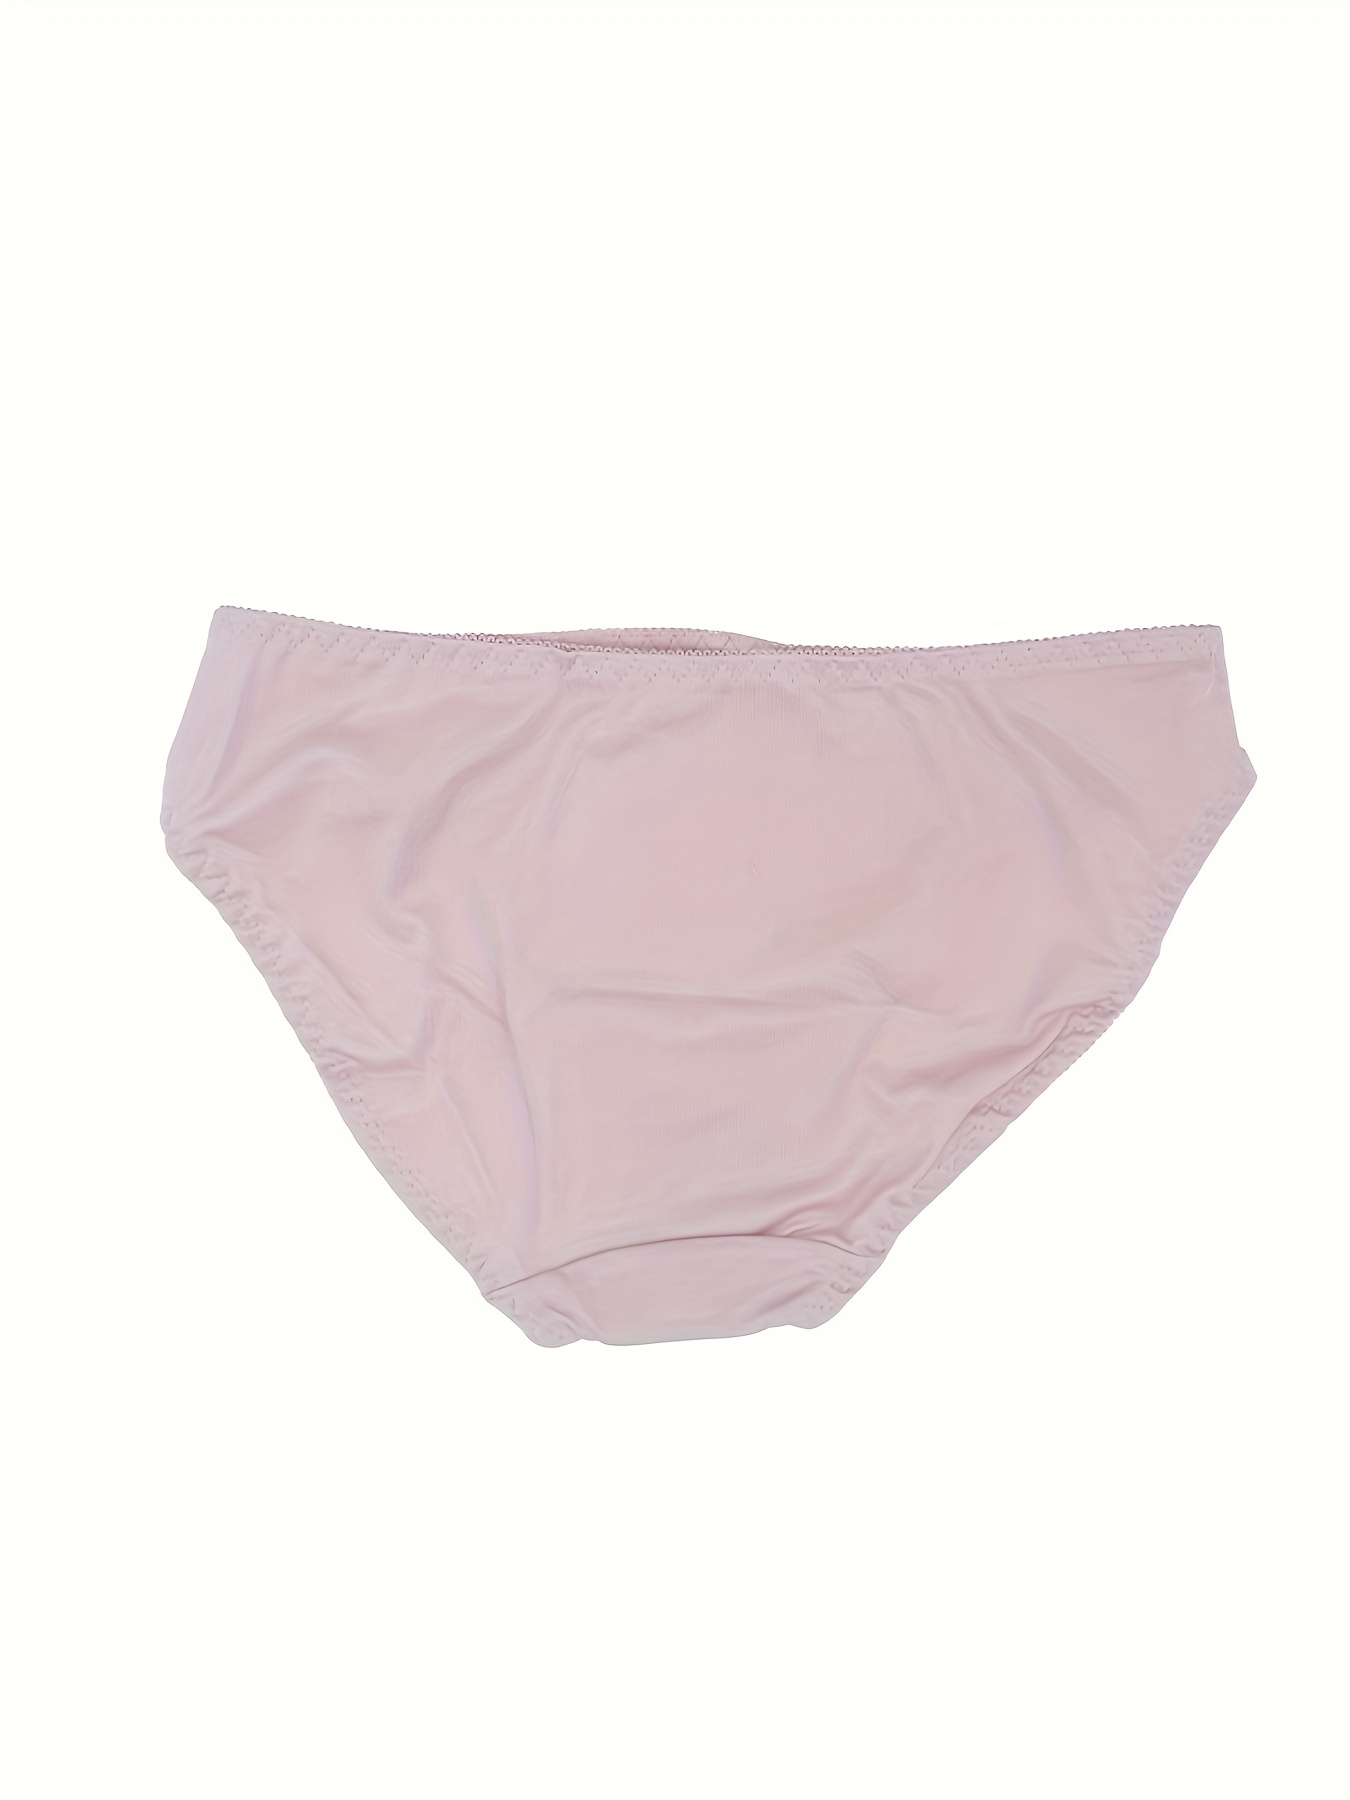 Teen Girls Soft Cotton Underwear Breathable Comfort Lingerie